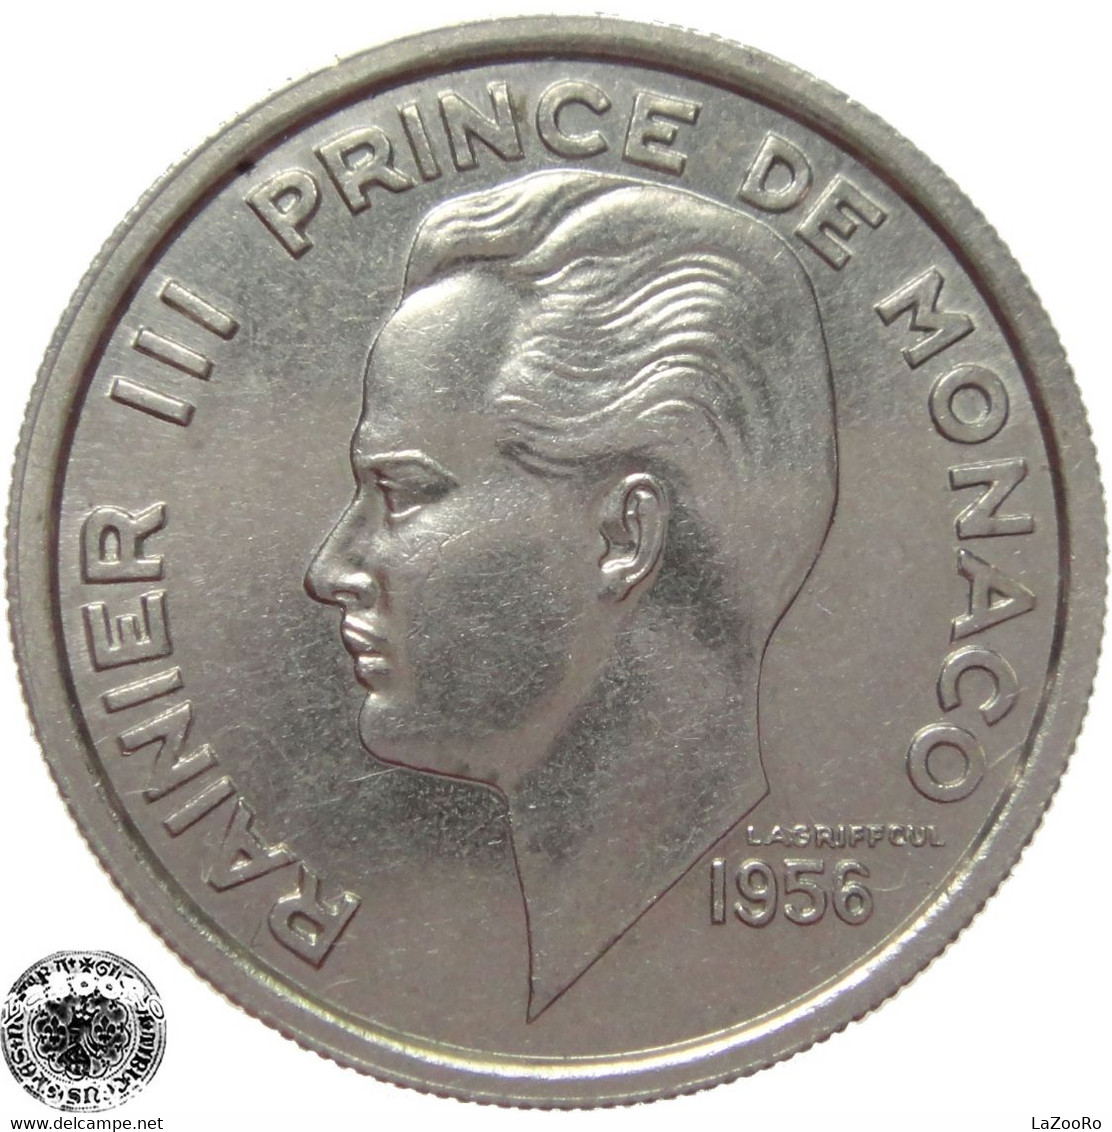 LaZooRo: Monaco 100 Francs 1956 UNC - 1949-1956 Franchi Antichi